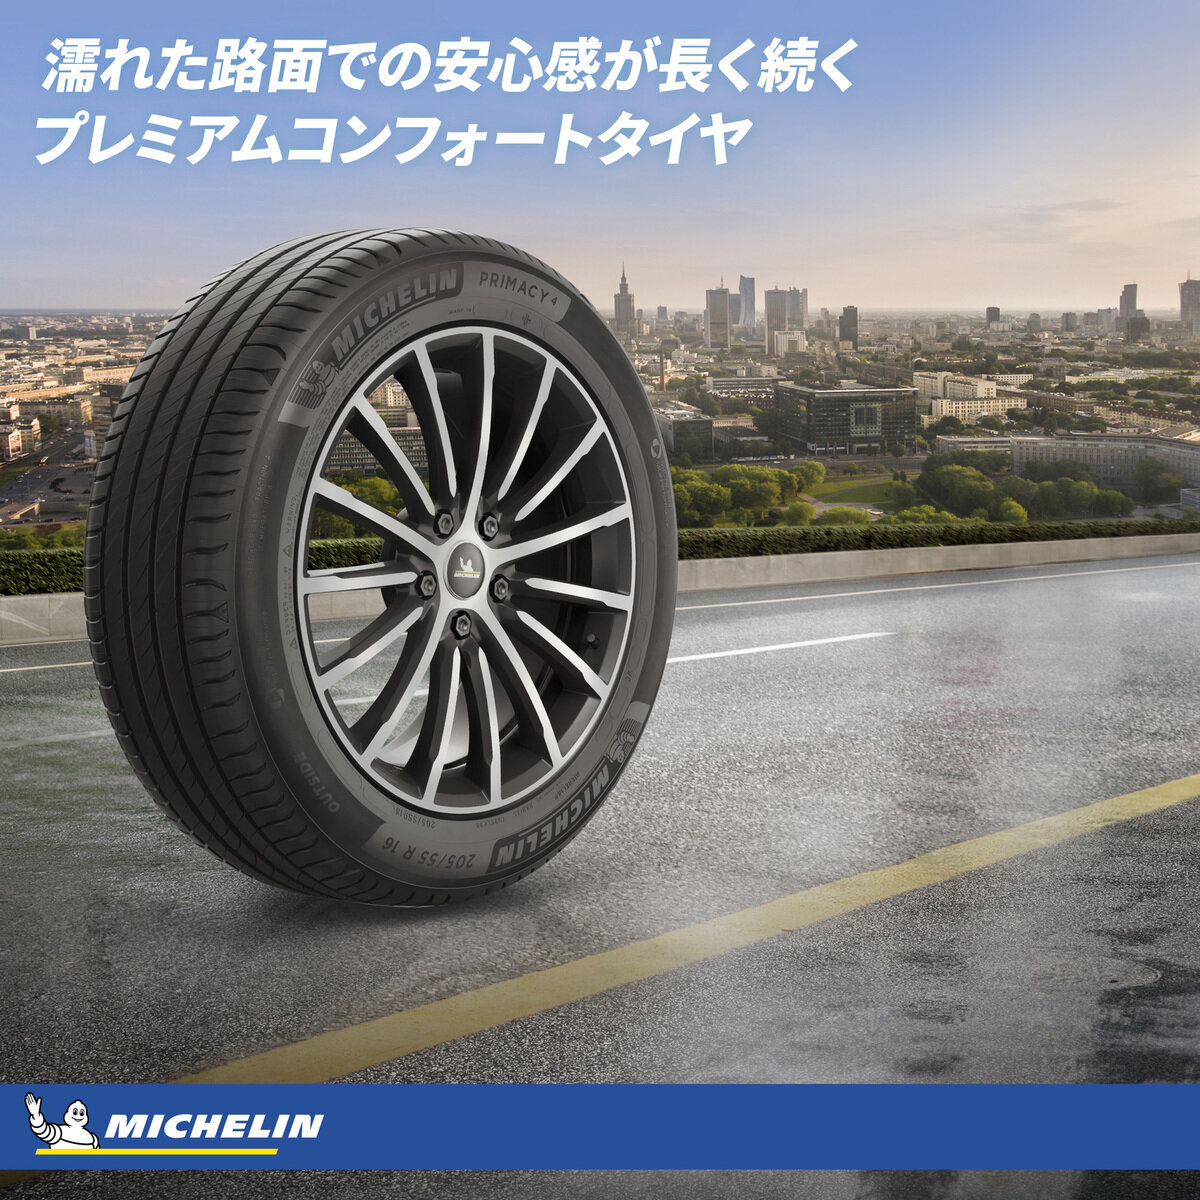 Michelin 195/60 R16 93V XL TL PRIMACY 4+ MI | Costco Japan